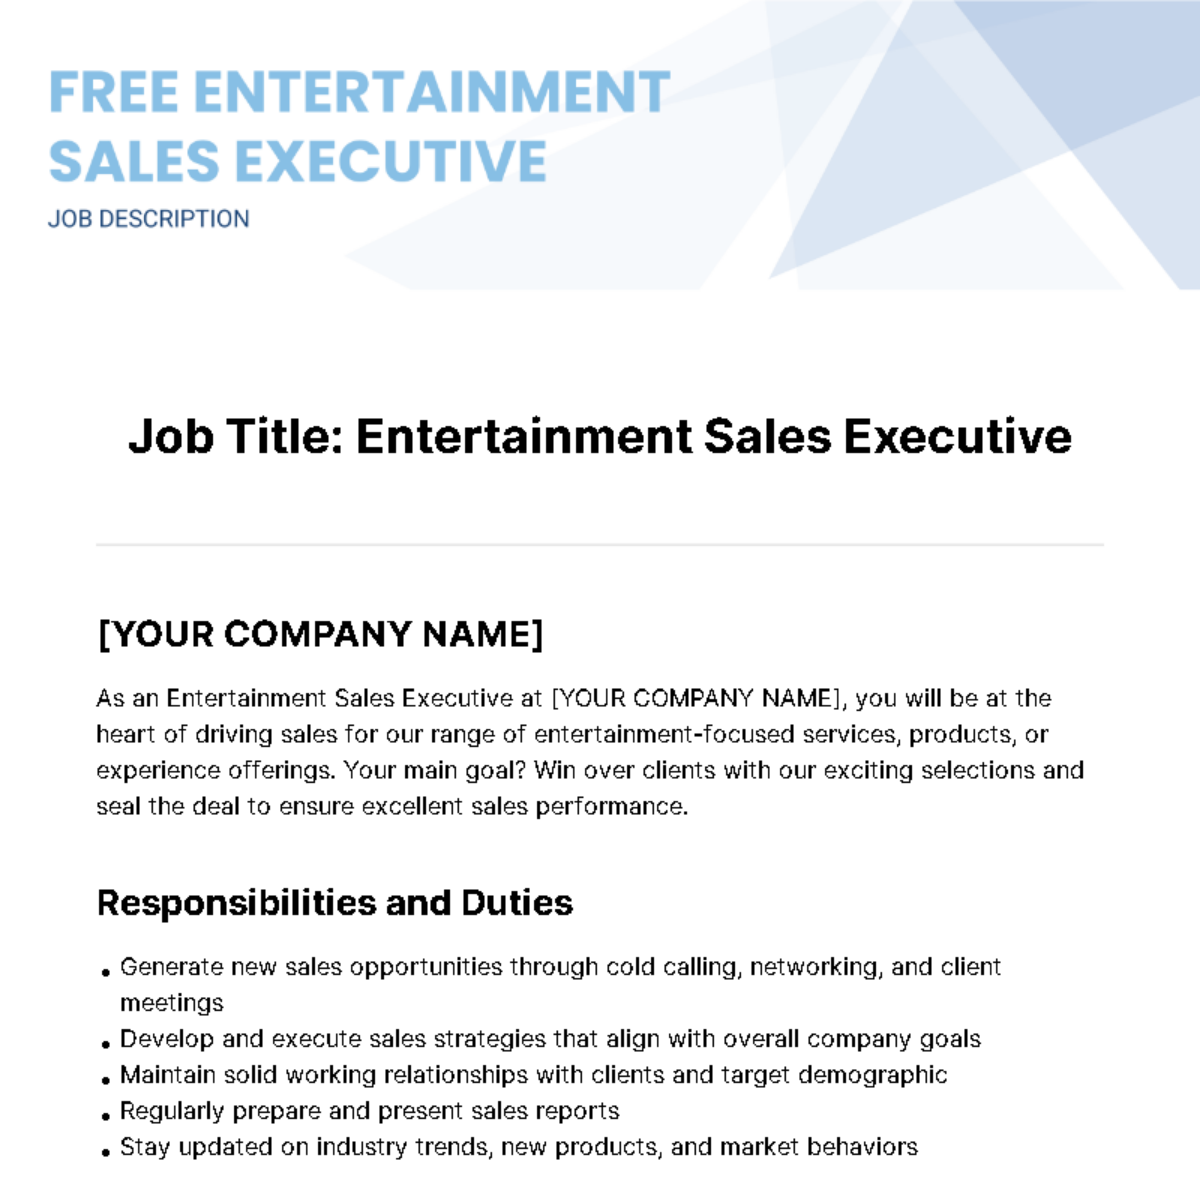 Free Entertainment Sales Executive Job Description Template